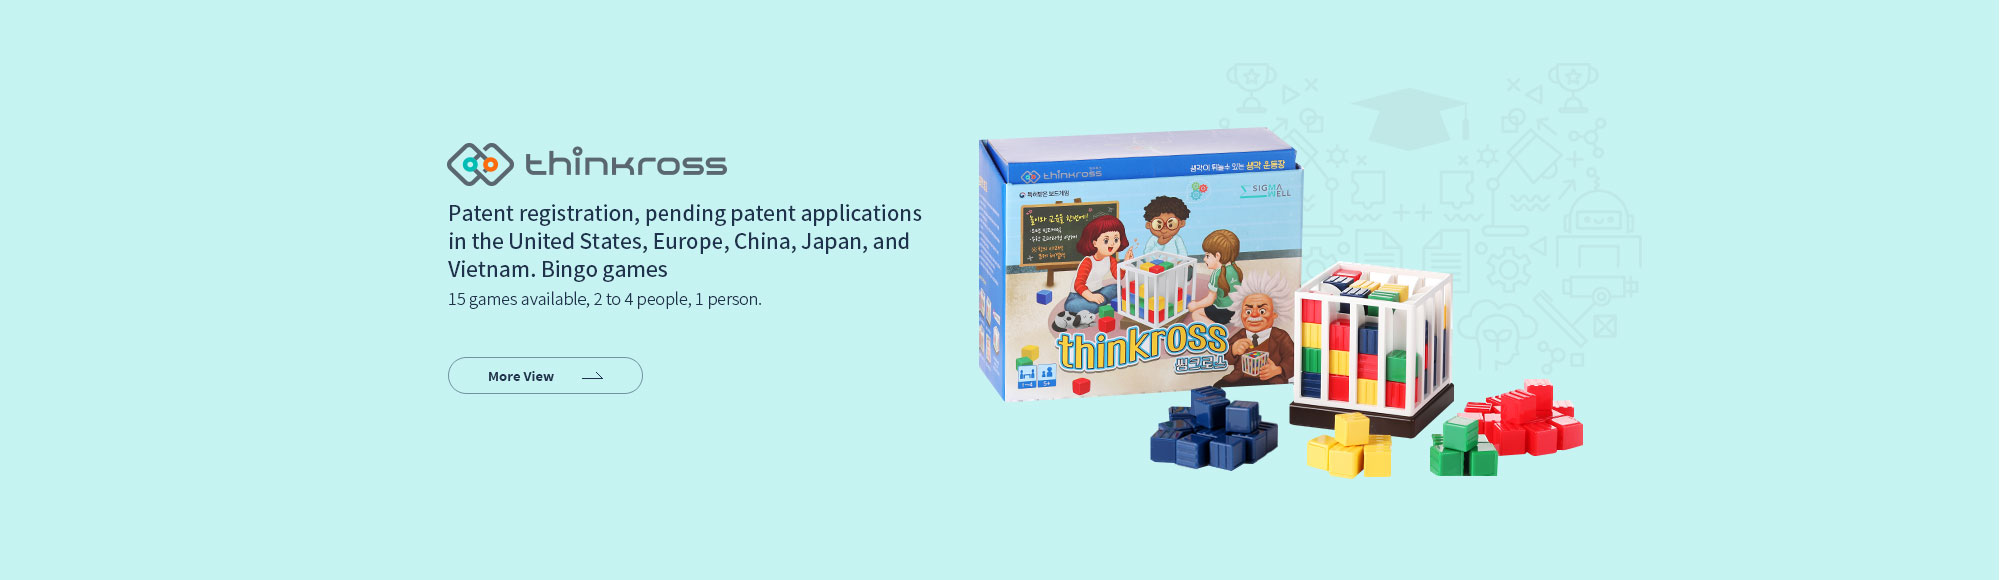 Thinkross
Patent registration pending patent application Bingo game